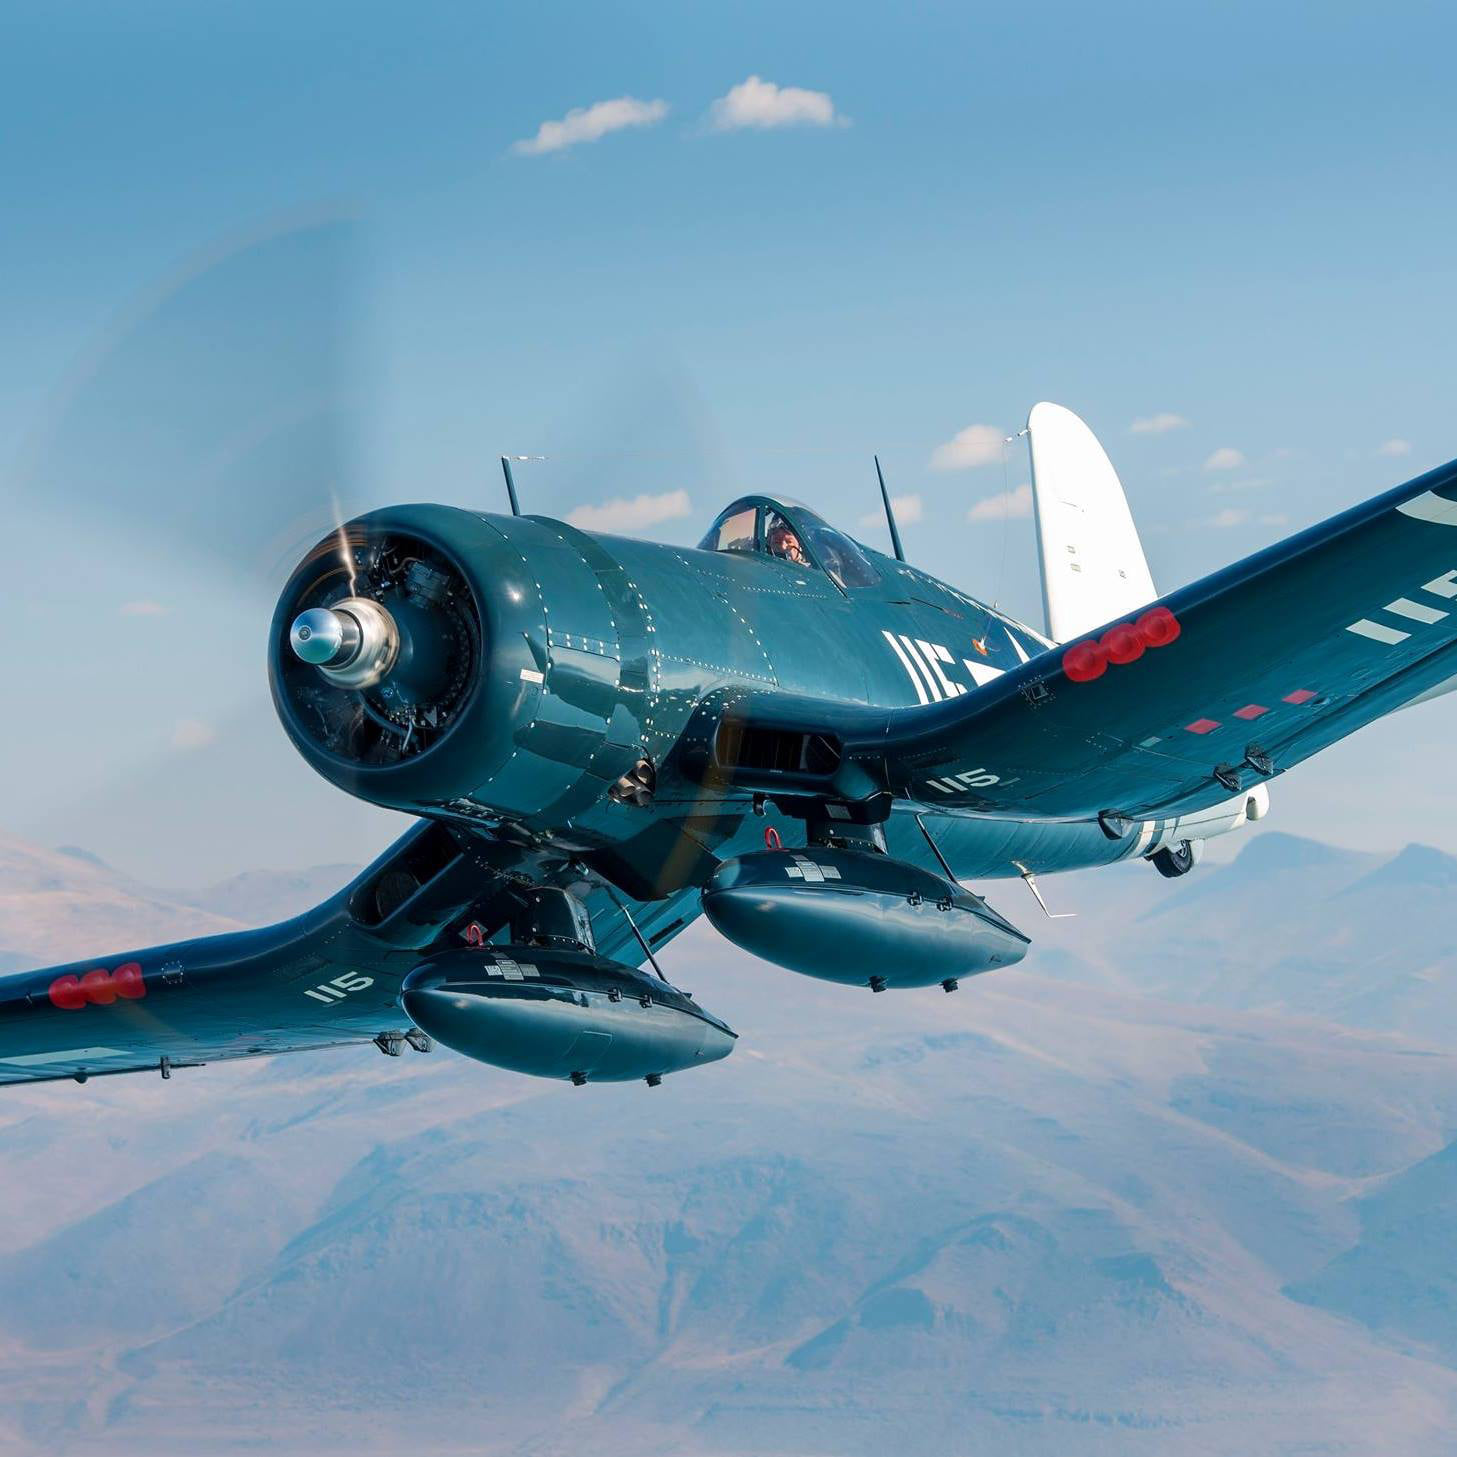 F4U-Corsair, singe-seat, single-wing, single-engine, fighter